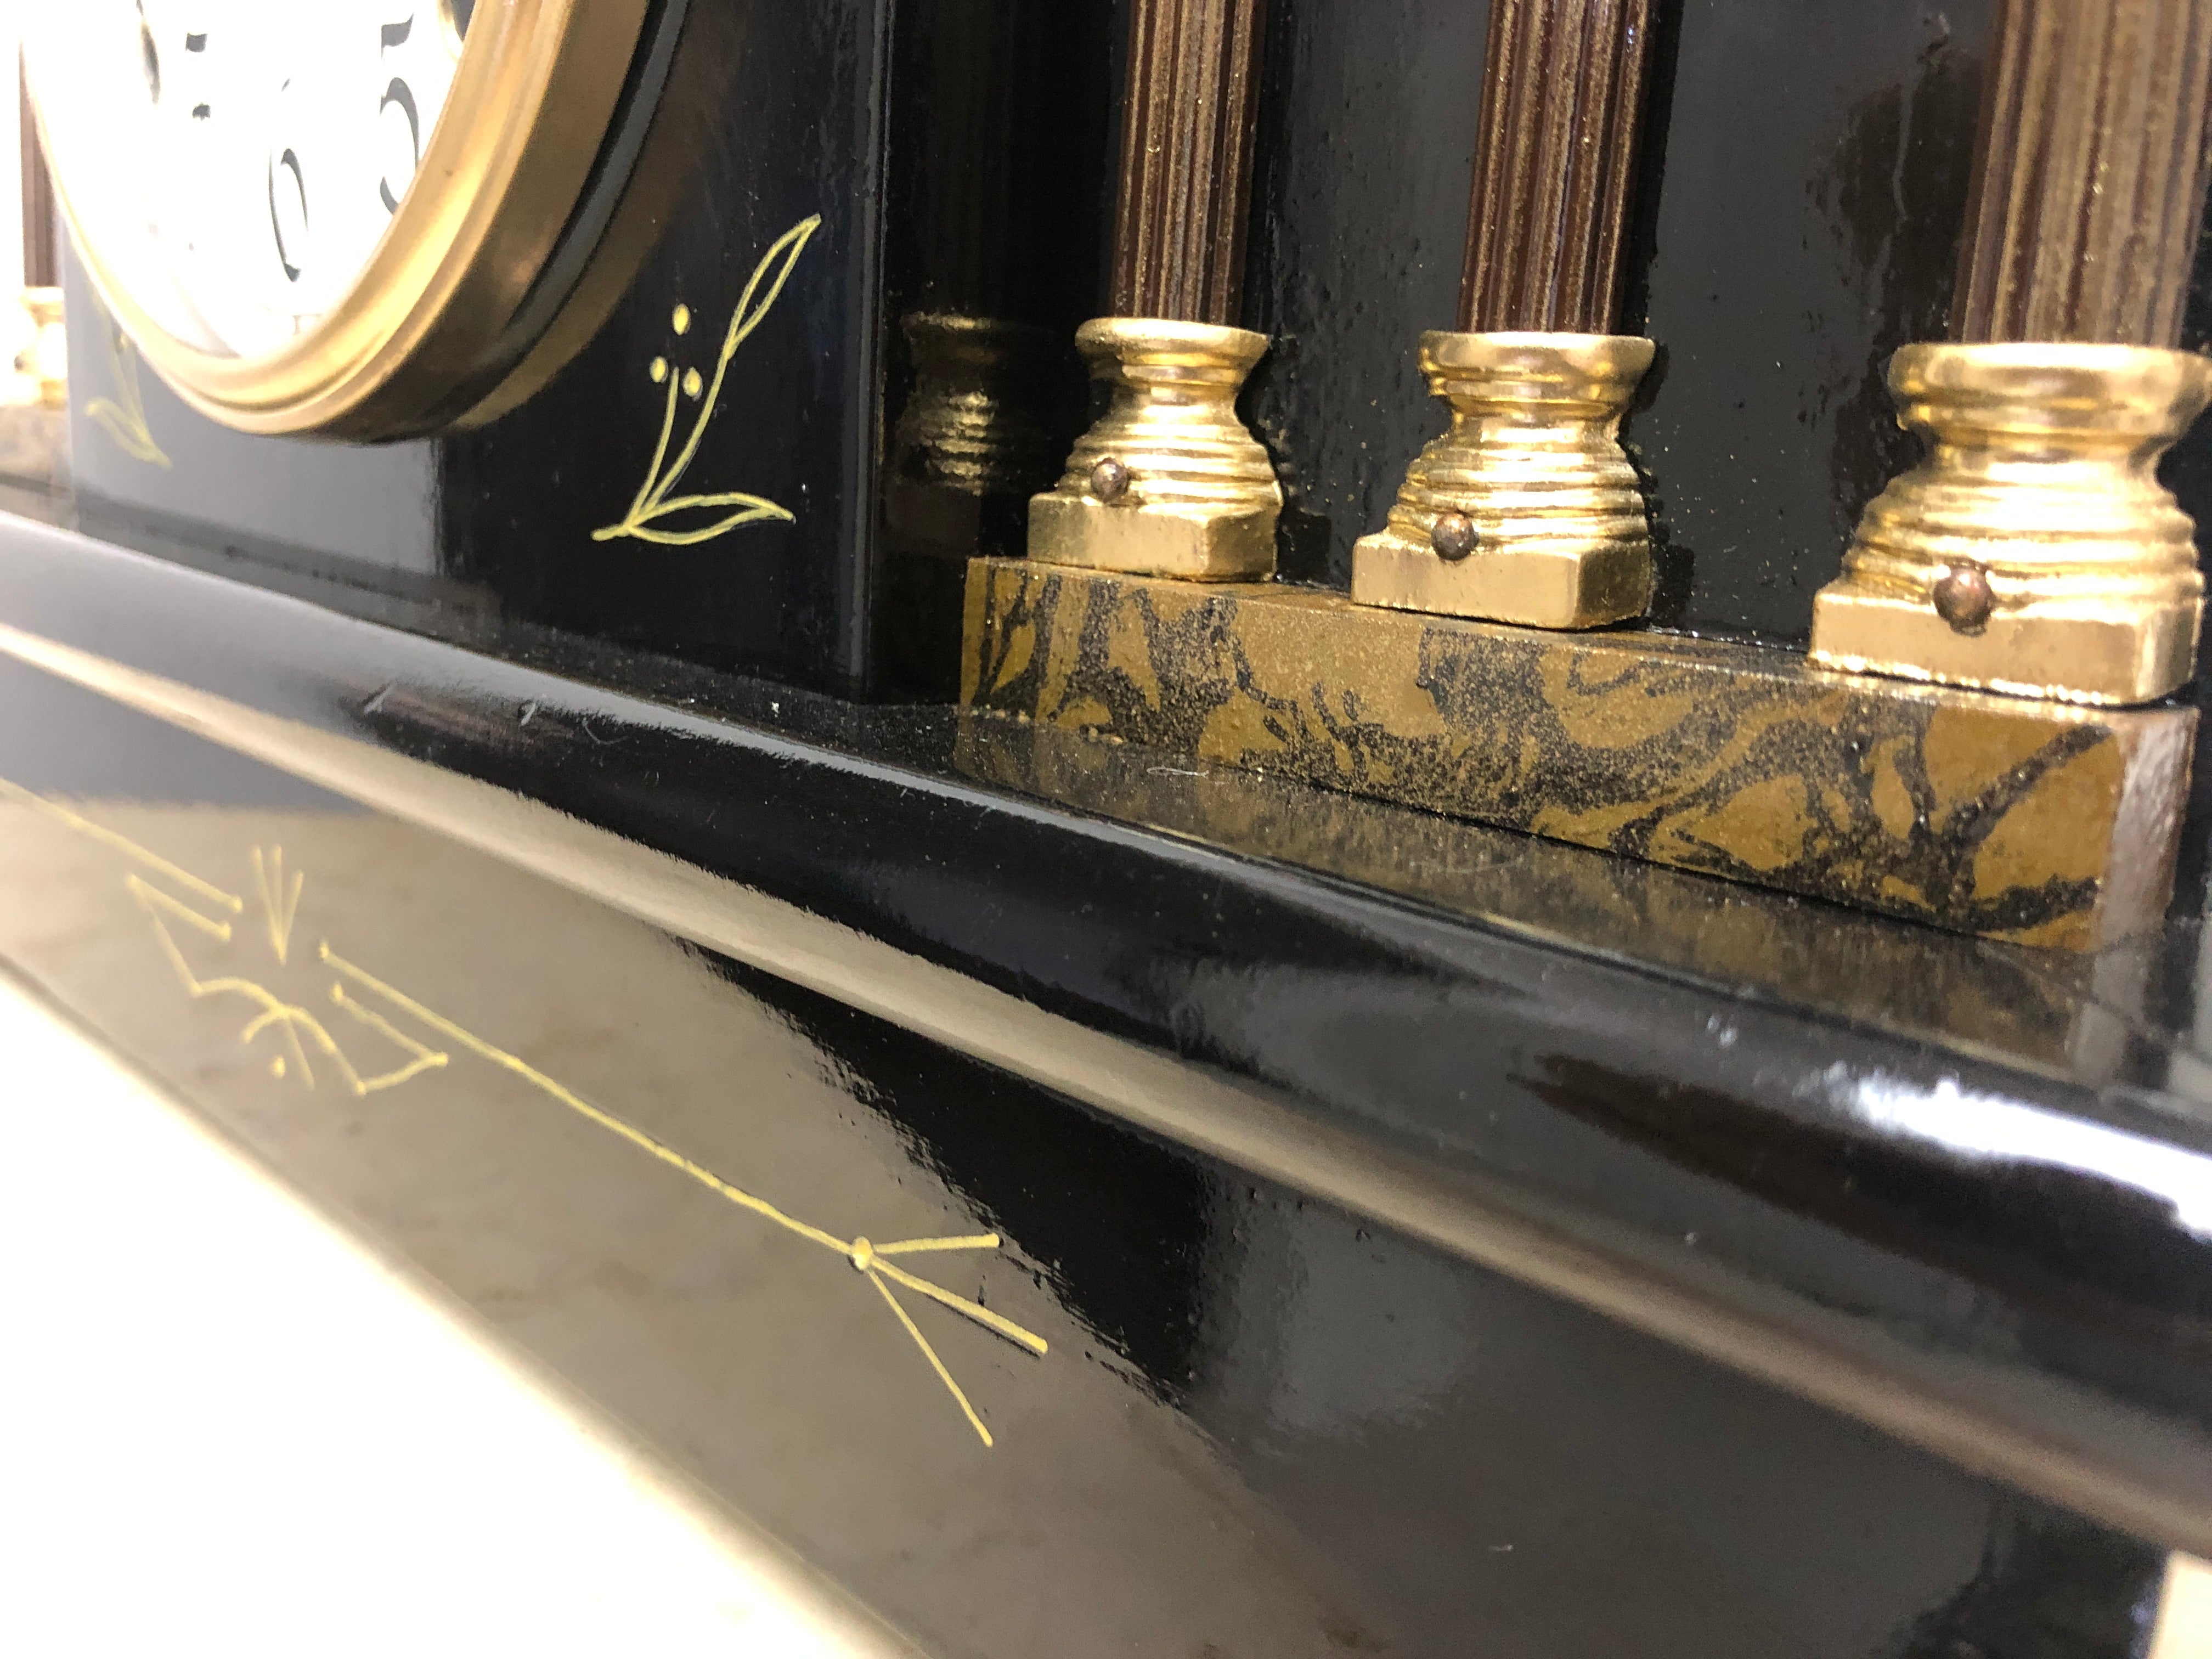 Antique GILBERT Chime U.S.A Mantel Clock | eXibit collection